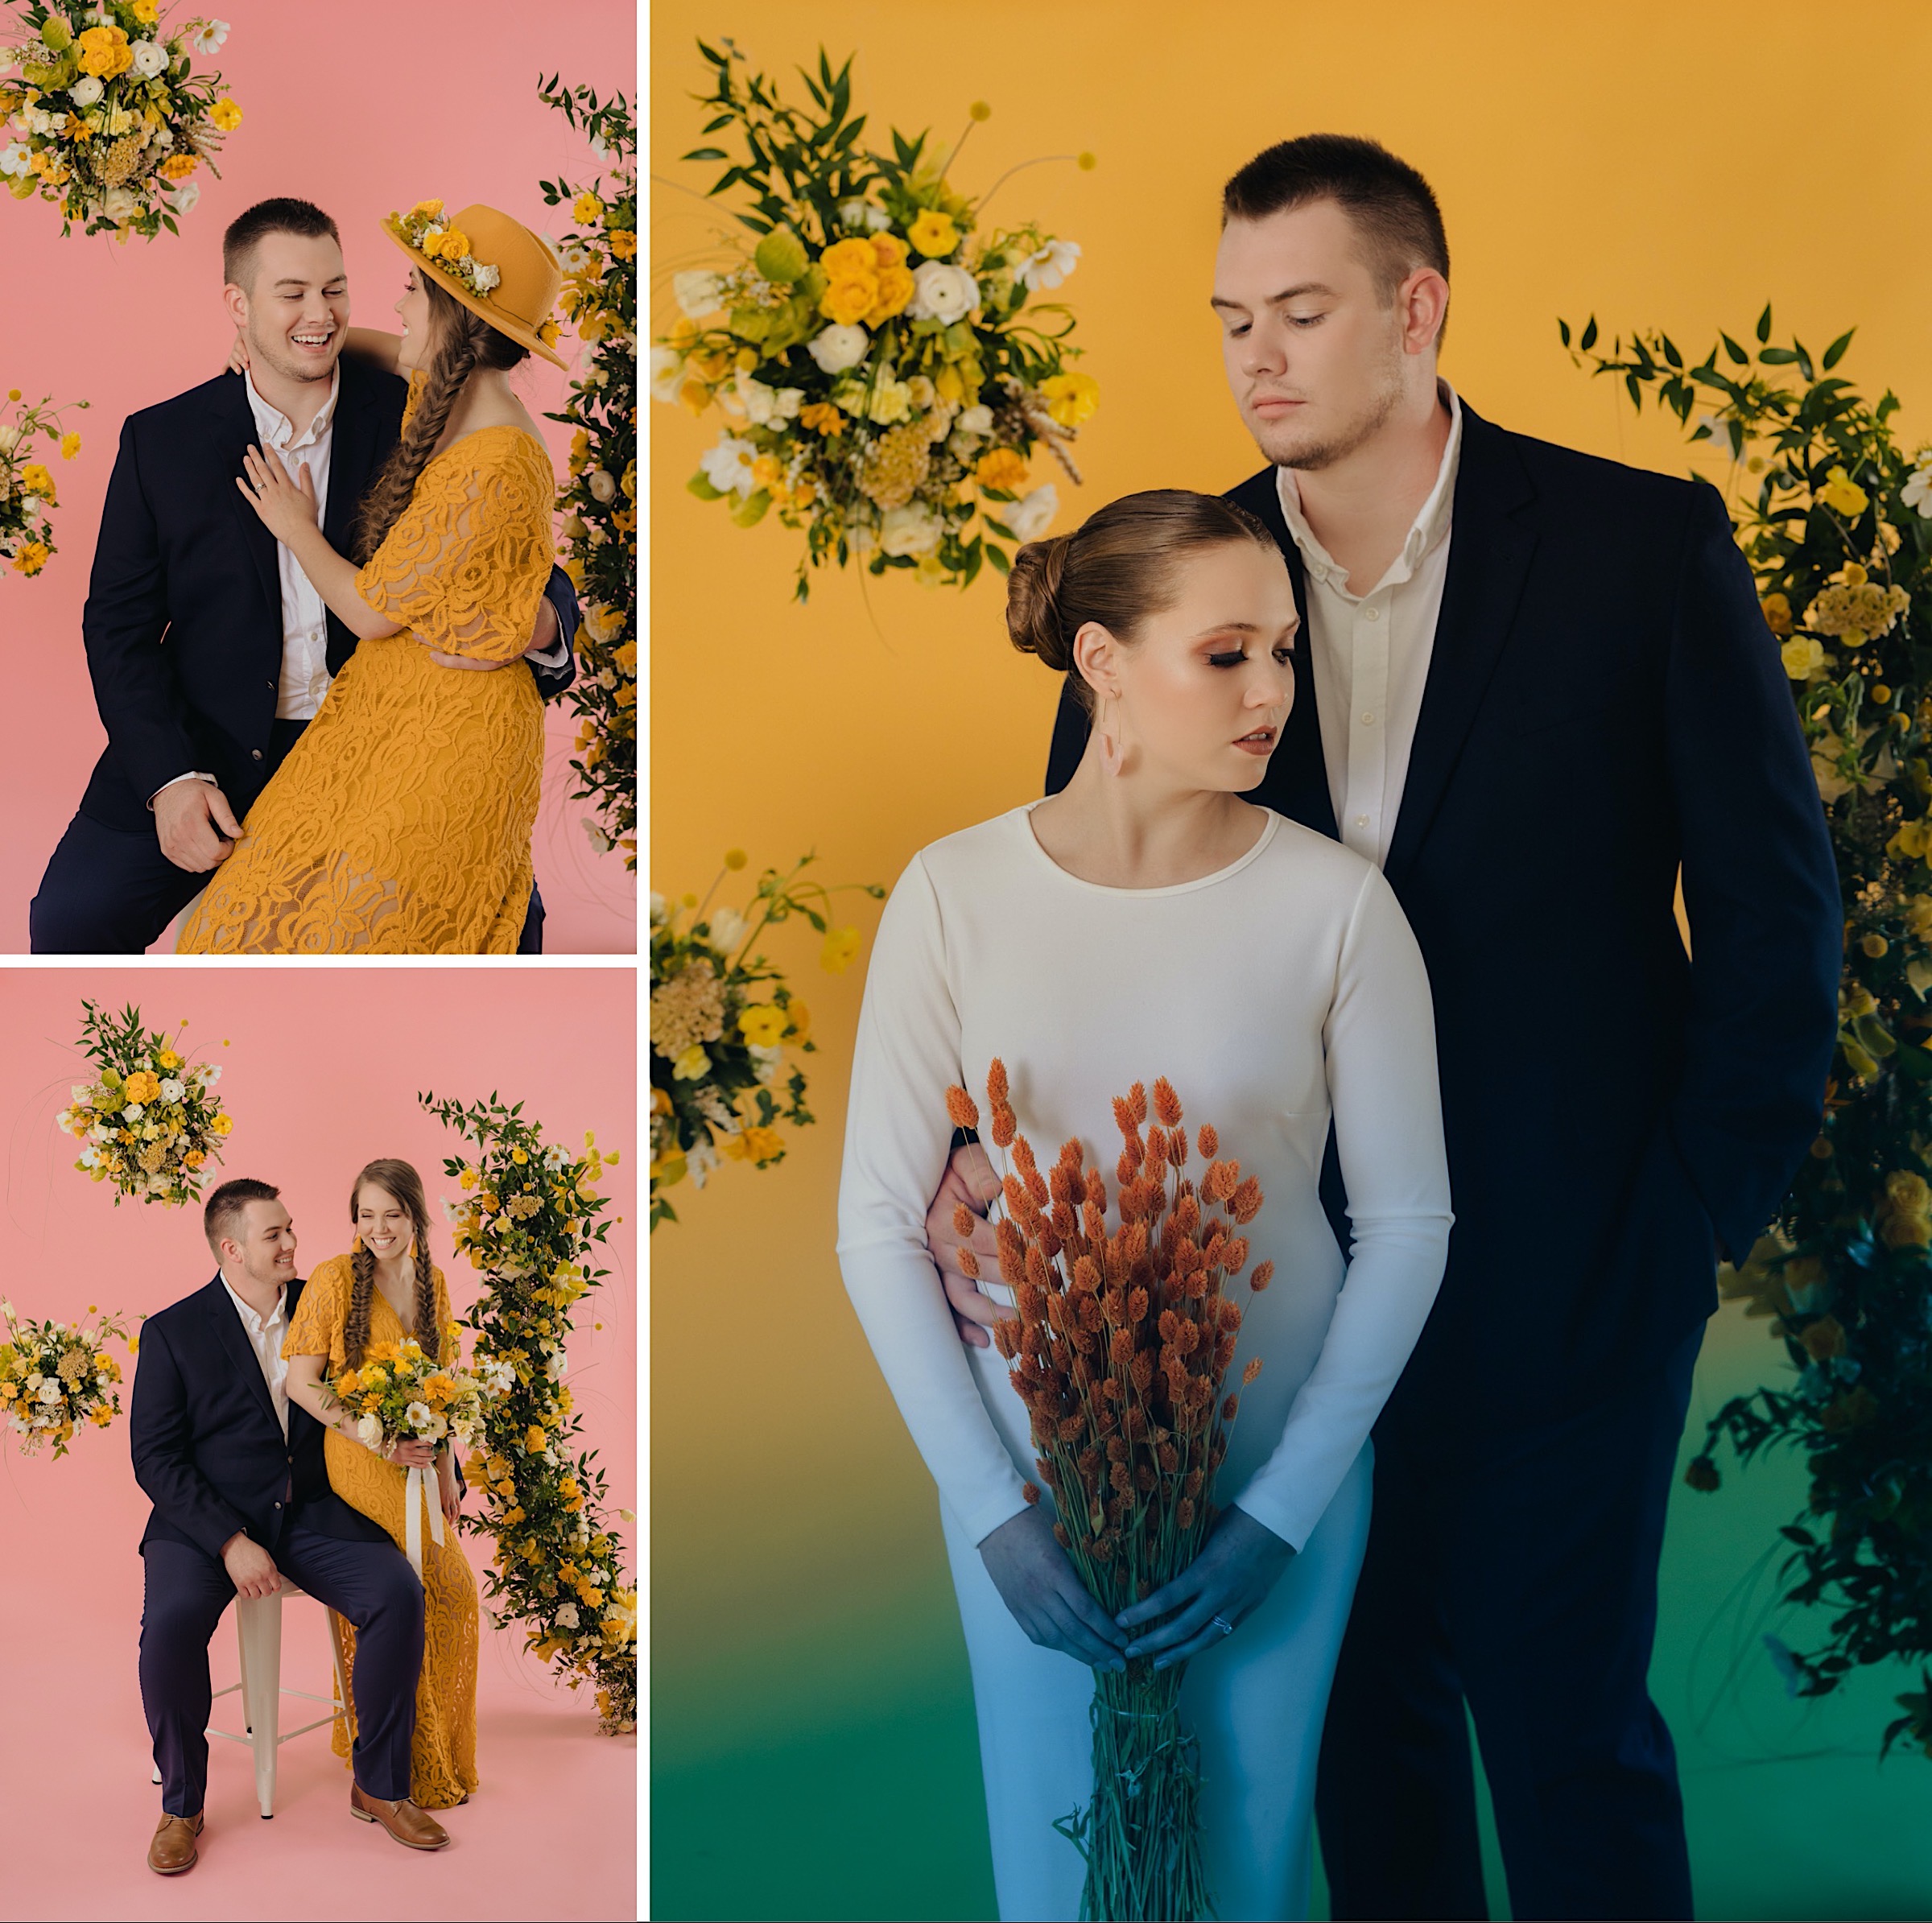 studio-styled-wedding-shoot-pink-yellow-background-floral-installation-yellow-dress-fedora-flowers